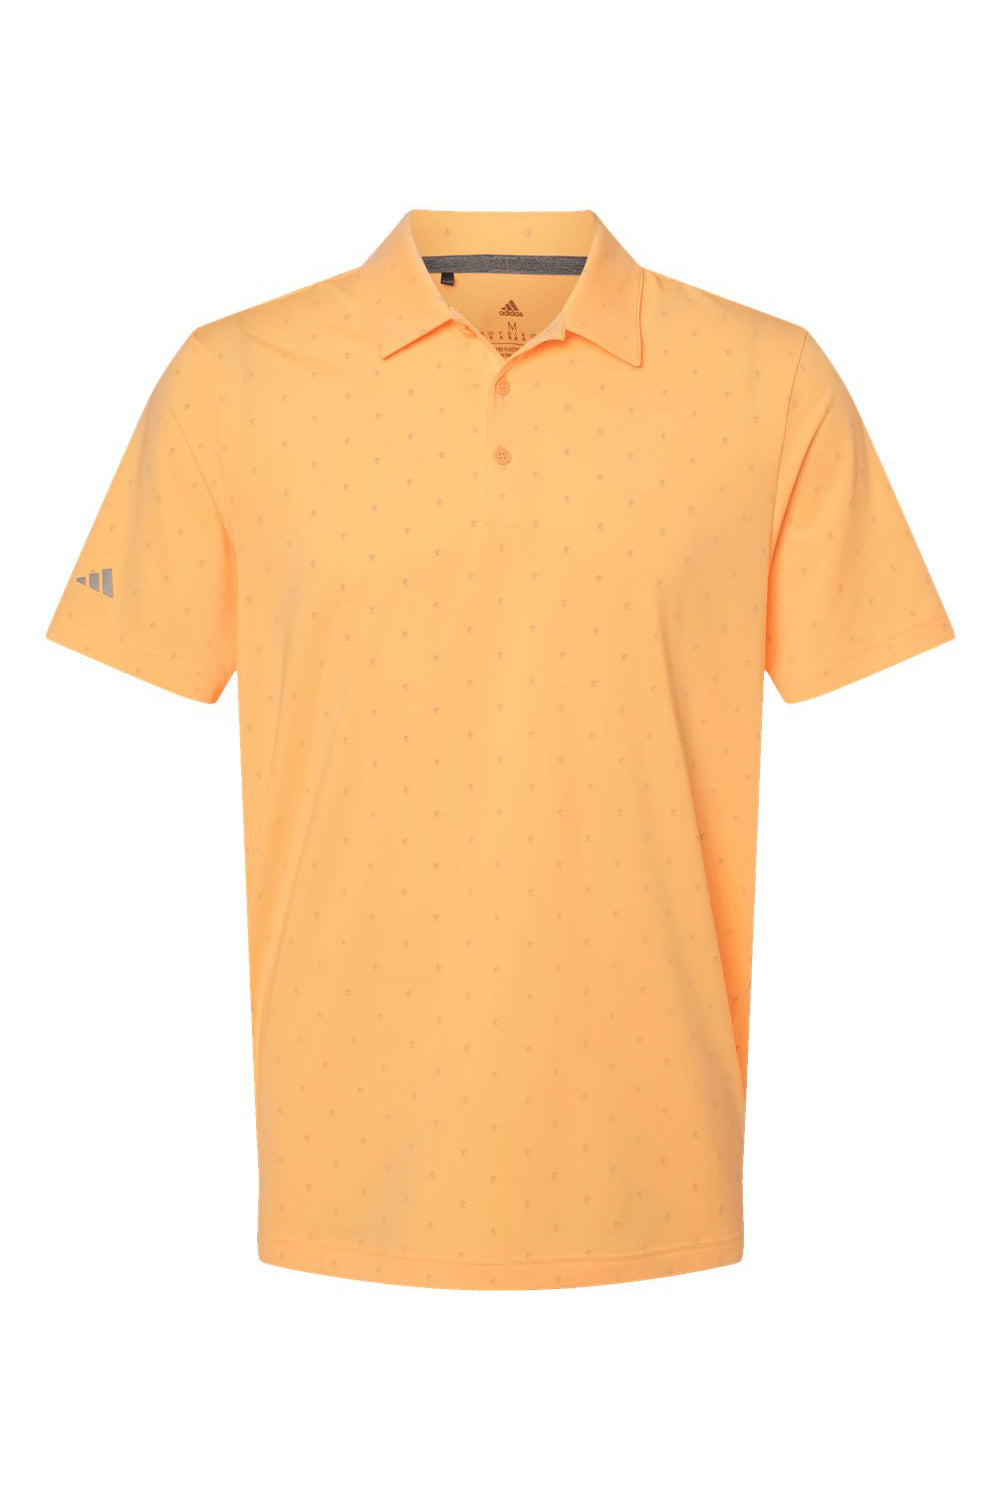 Adidas A574 Mens Pine Tree Moisture Wicking Short Sleeve Polo Shirt Acid Orange/Grey Flat Front